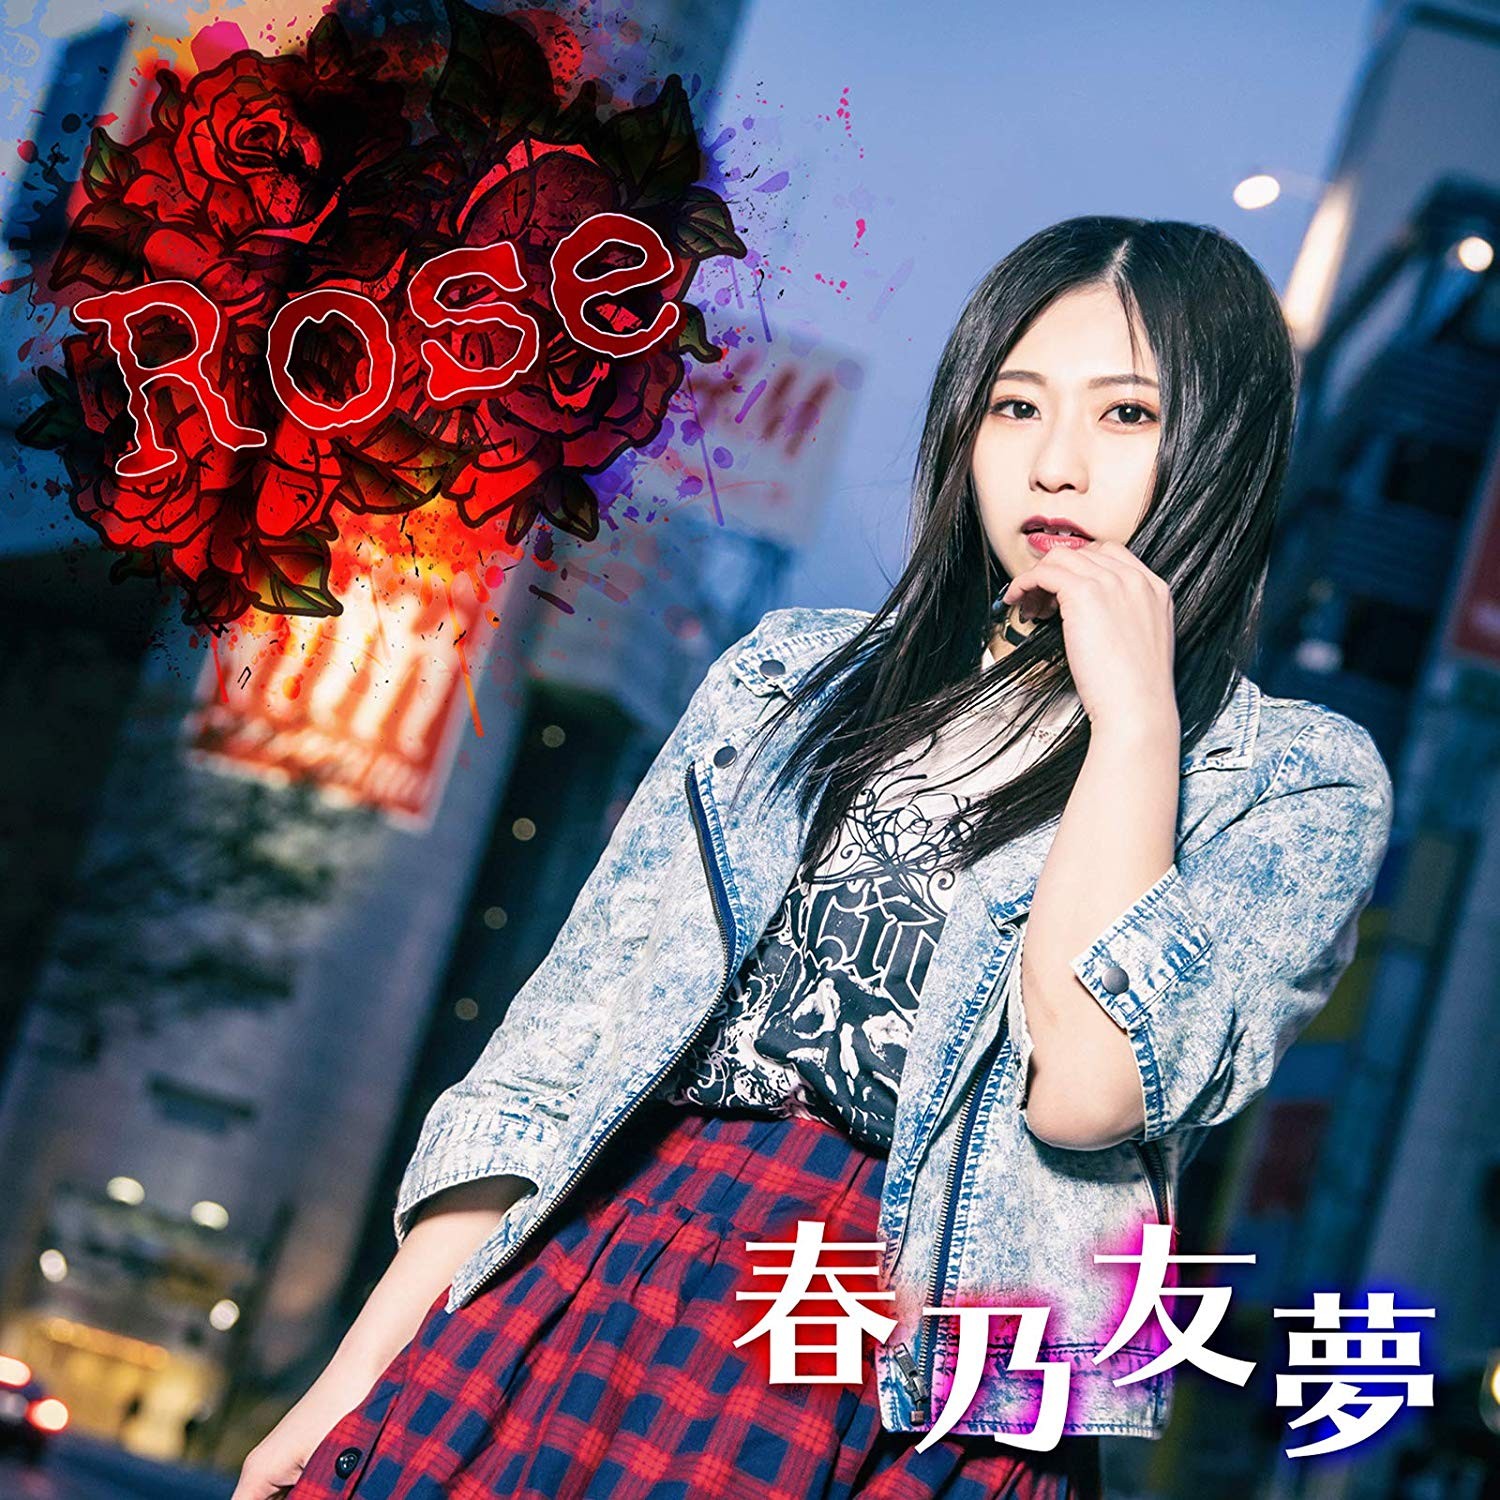 春乃友夢 (Yumu Haruno) – Rose [FLAC + MP3 320 / CD] [2019.05.14]